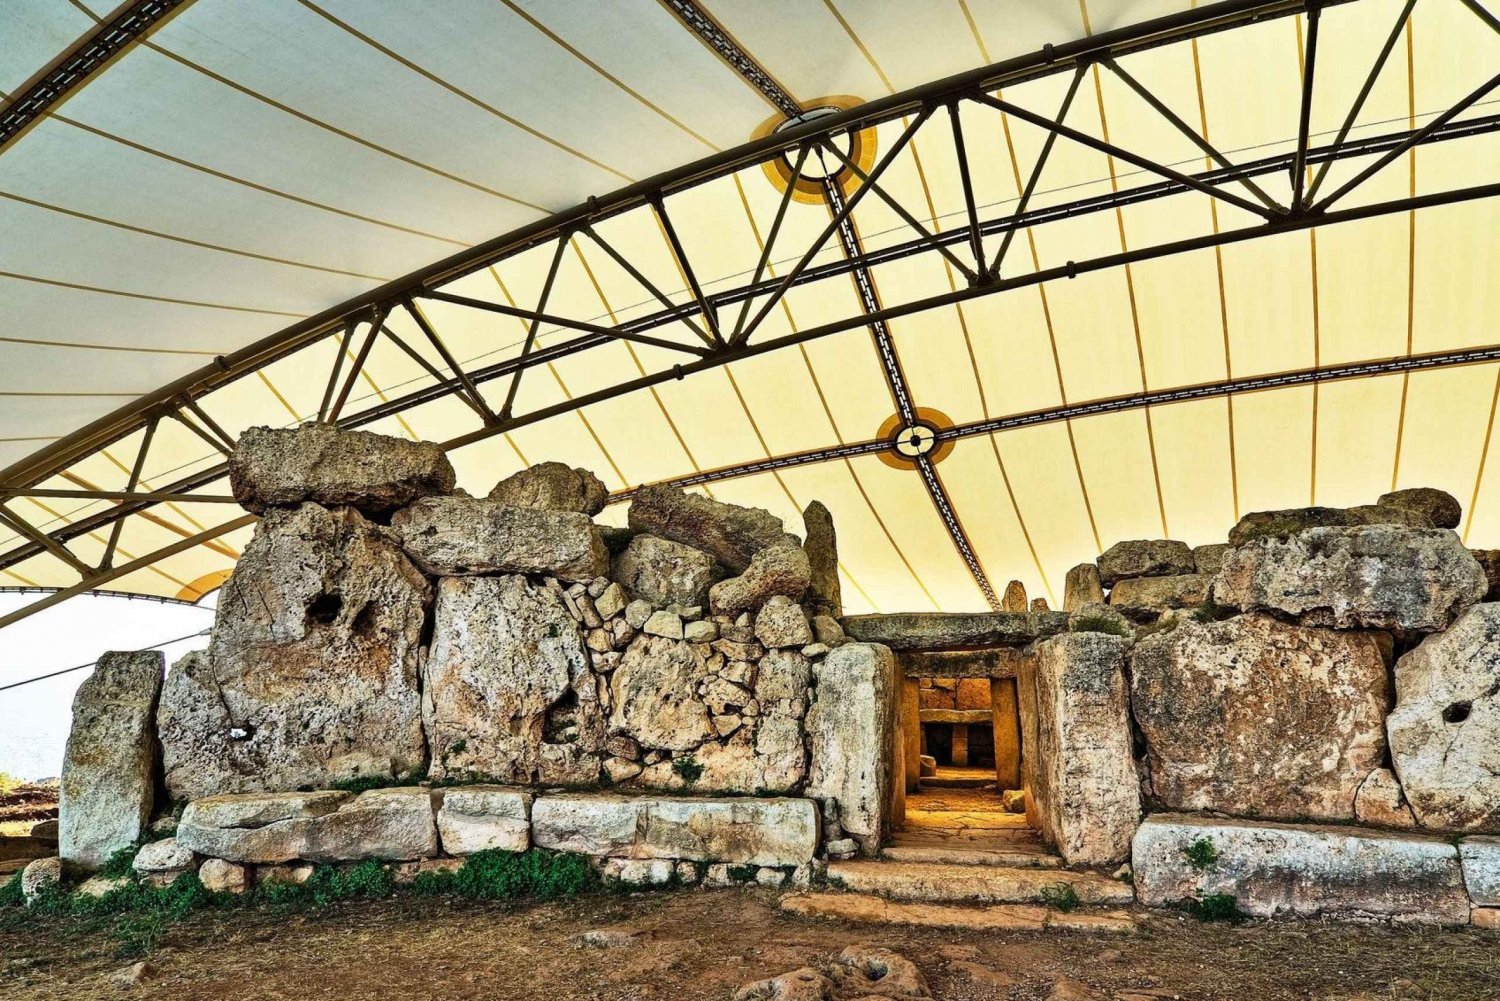 Malta: Prehistoric Temples, Limestone Heritage & Blue Grotto